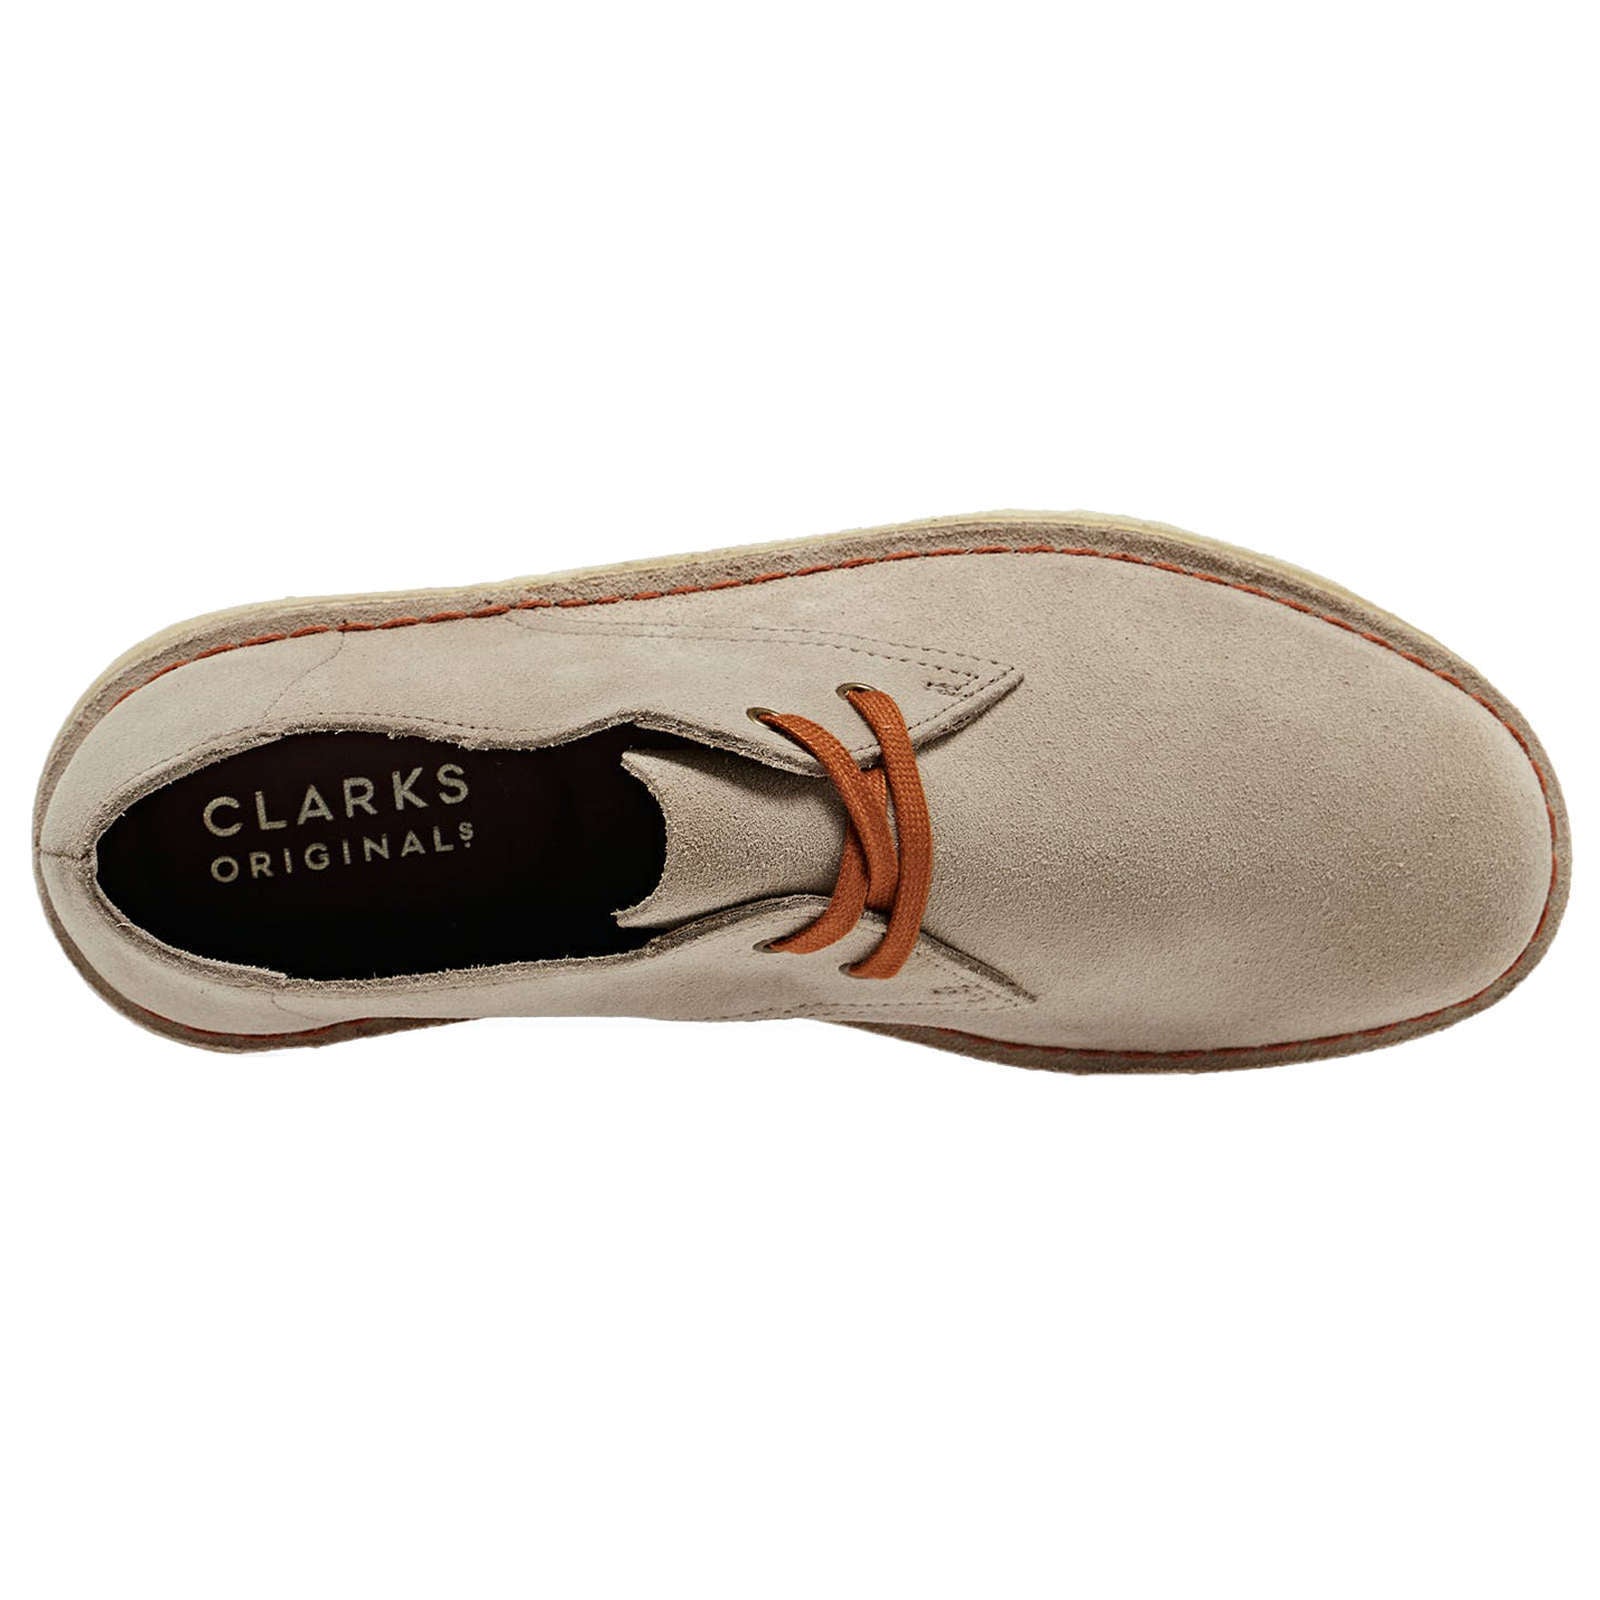 Clarks Originals Desert Khan Suede Leather Men's Shoes#color_sand